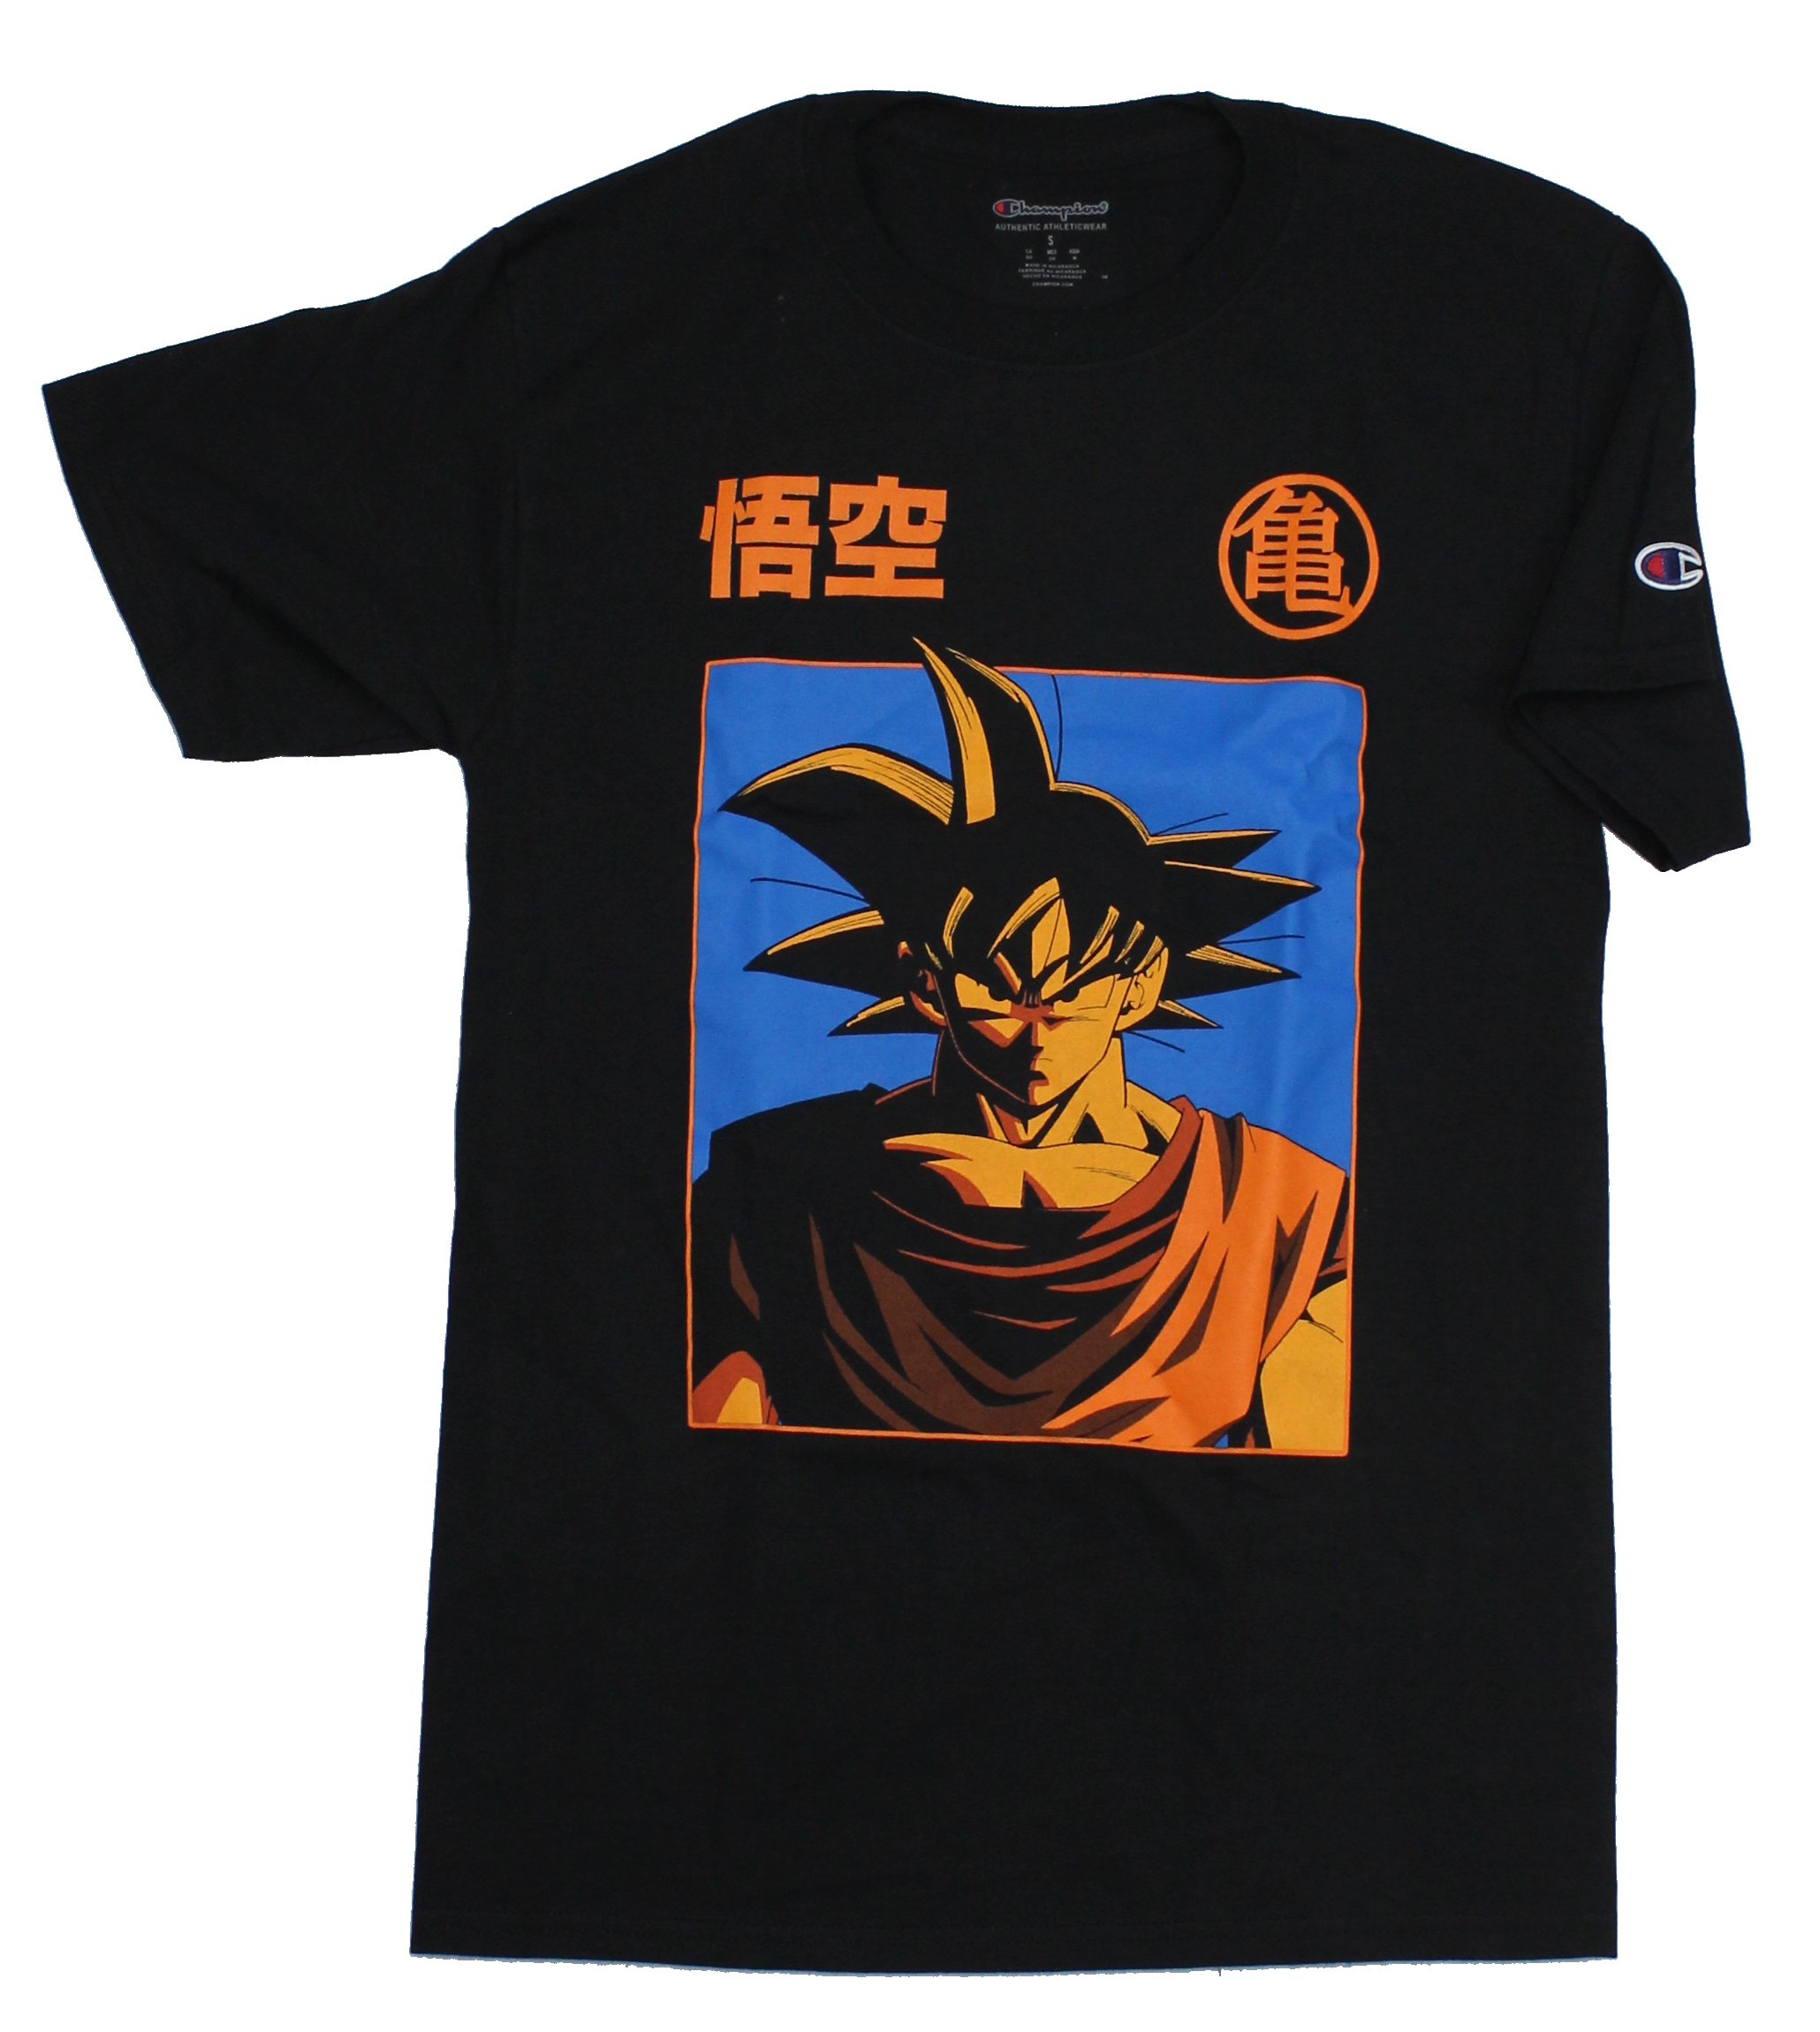 Dragon Ball Z Champion Mens T-Shirt - Goku Blue orange Box Image | eBay